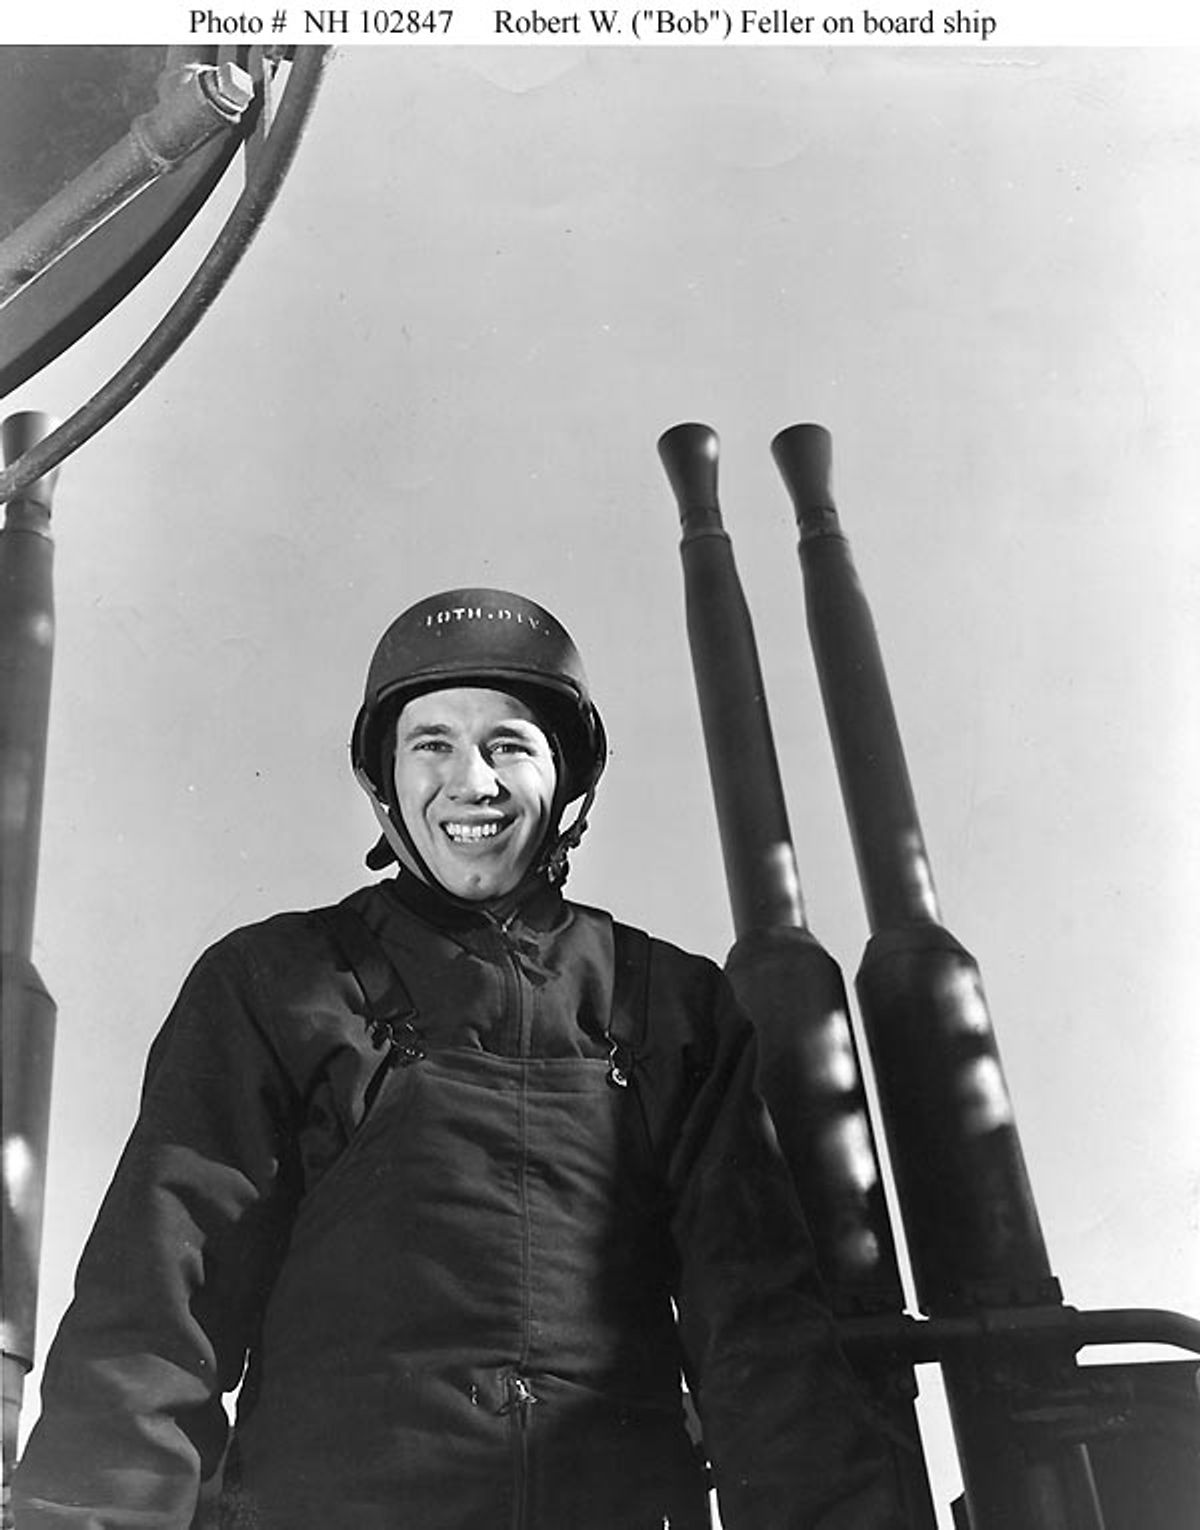 Bob Feller in the Navy during World War II.